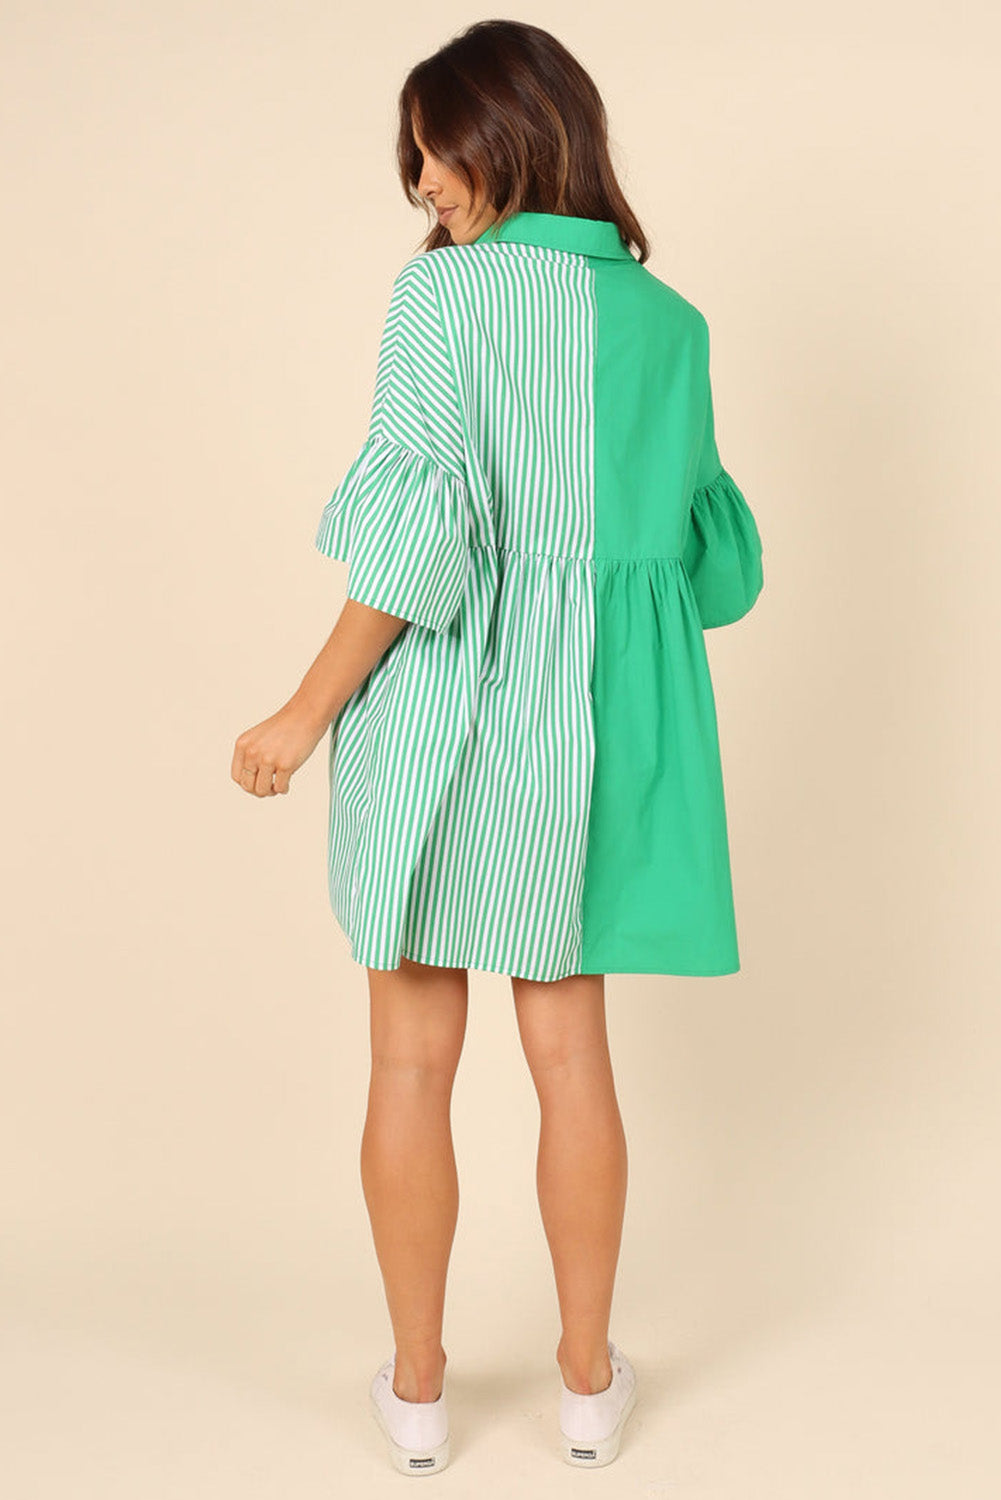 Green Striped Splicing Ruffle Sleeve Mini Shirt Dress